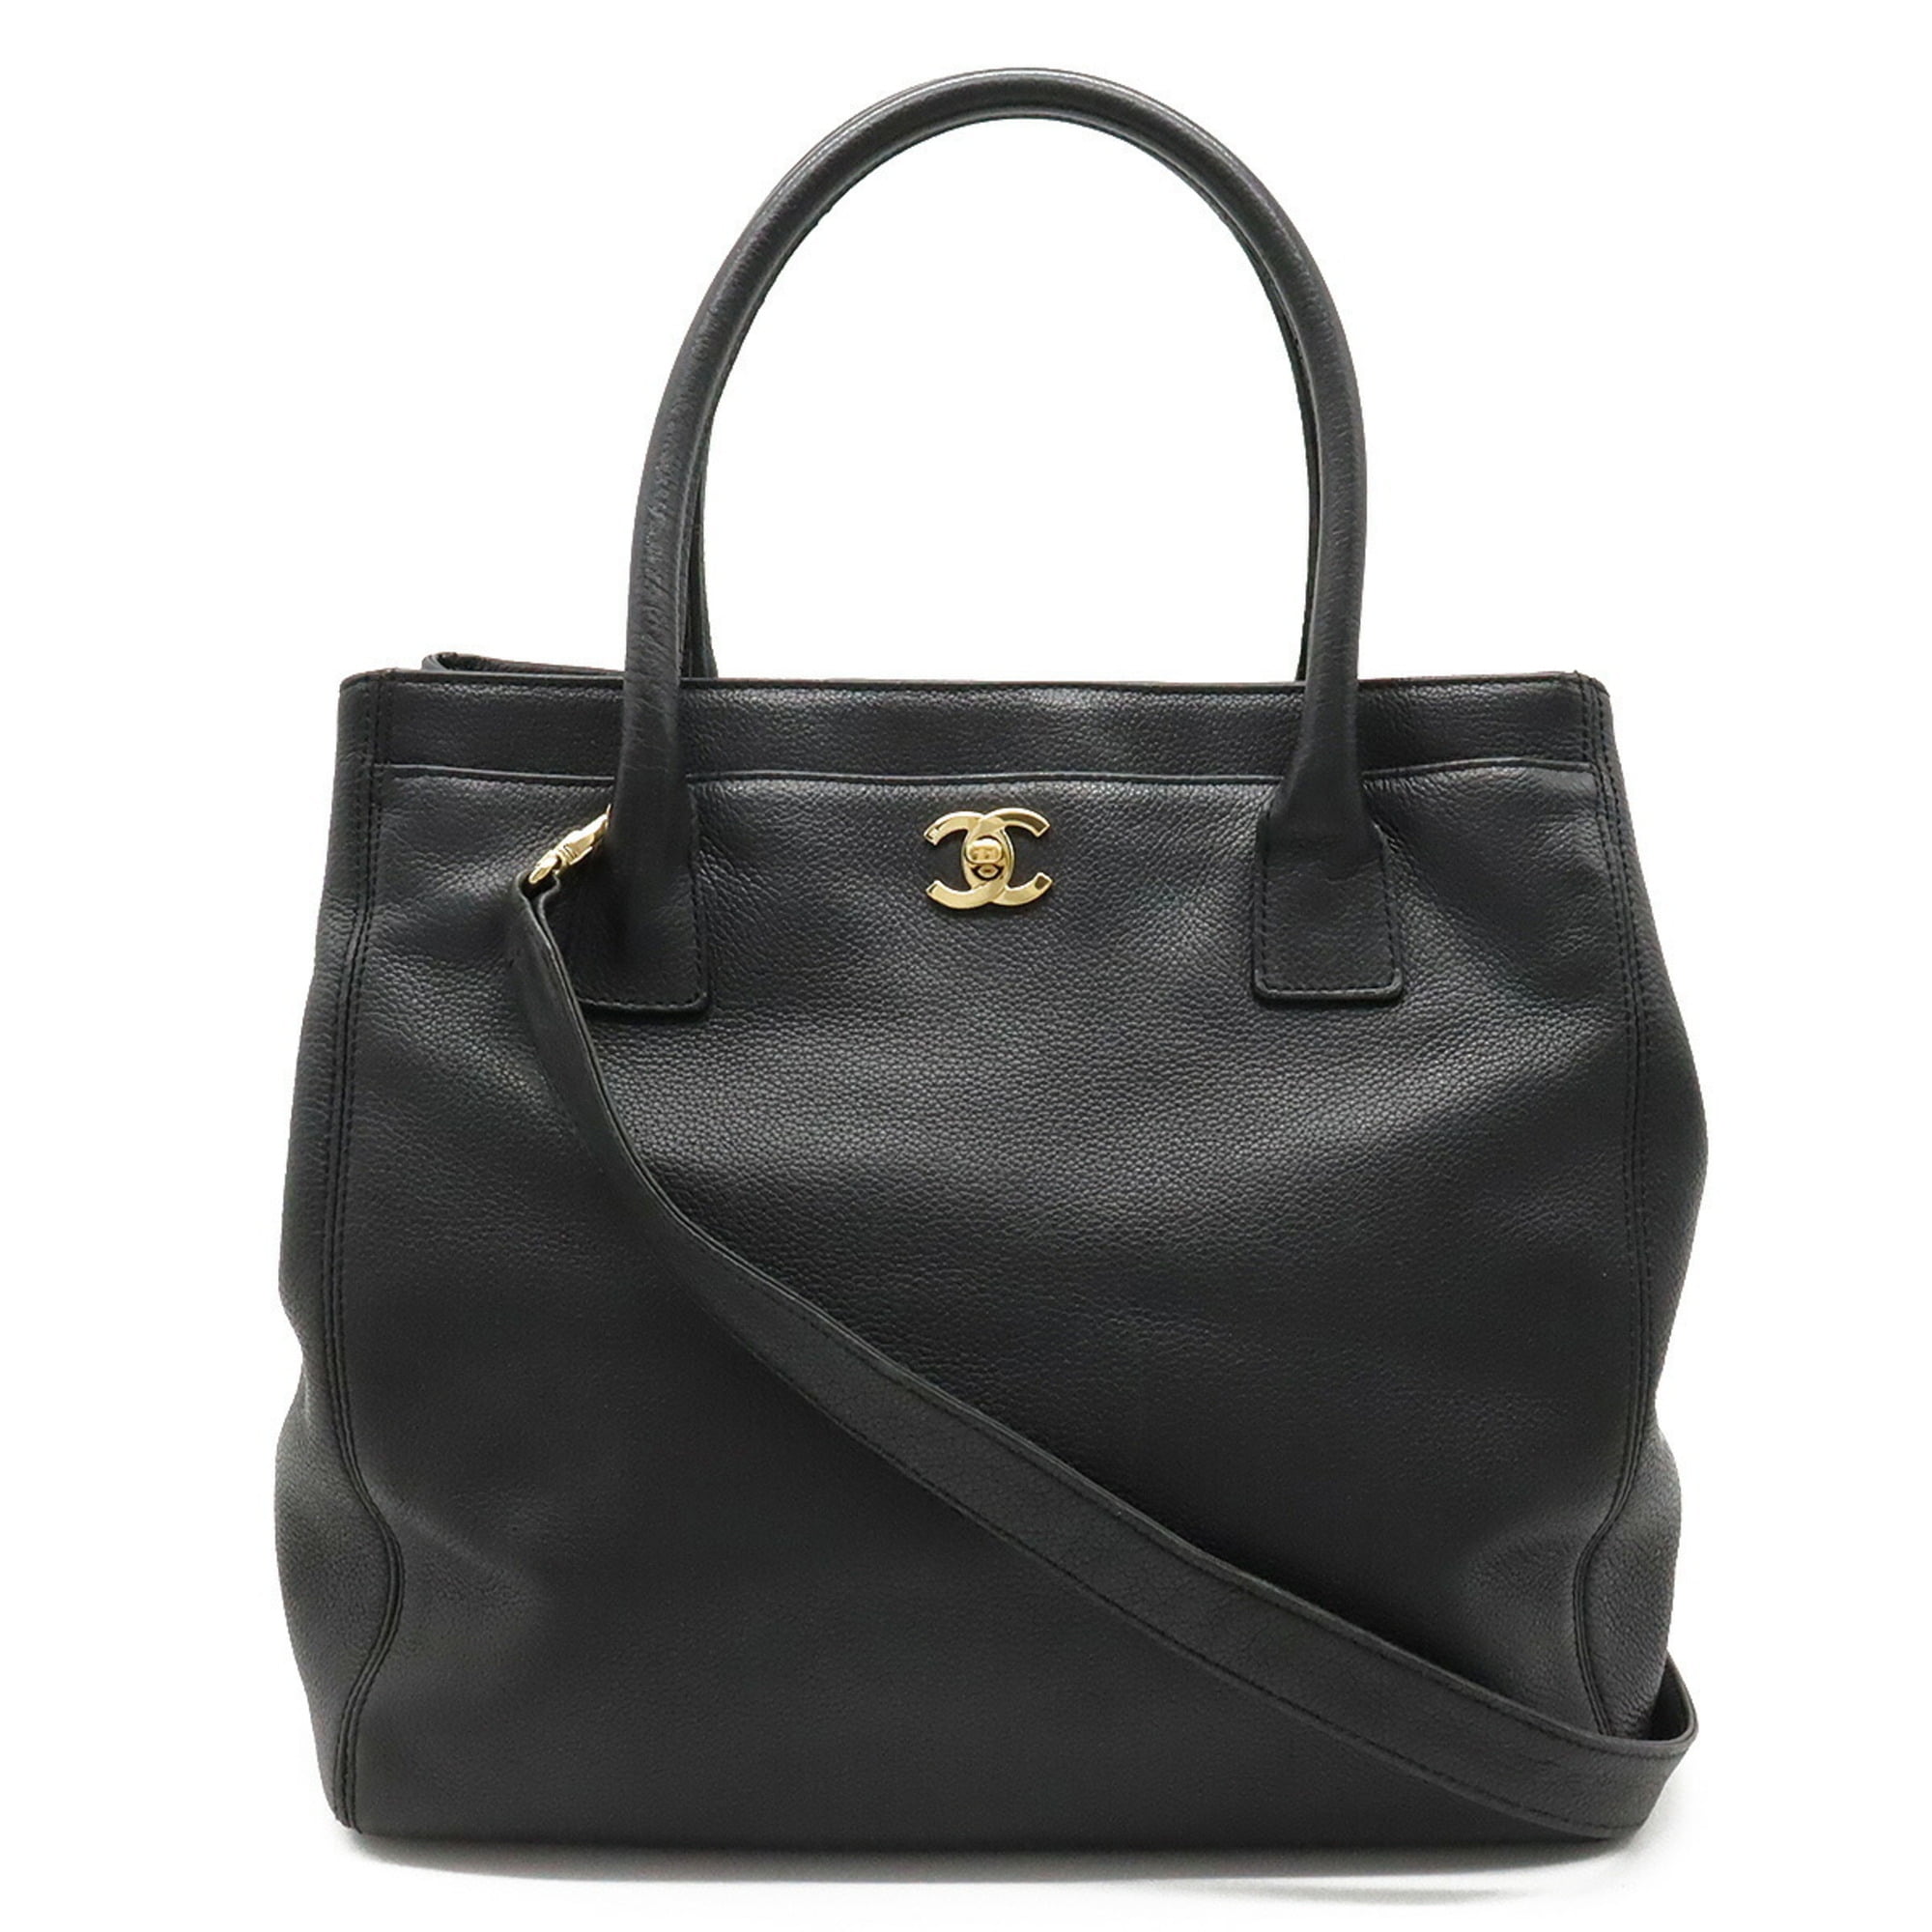 Chanel Chanel Executive Line Here Mark Tote Bag Handbag Shoulder Black  Pouch Shortage